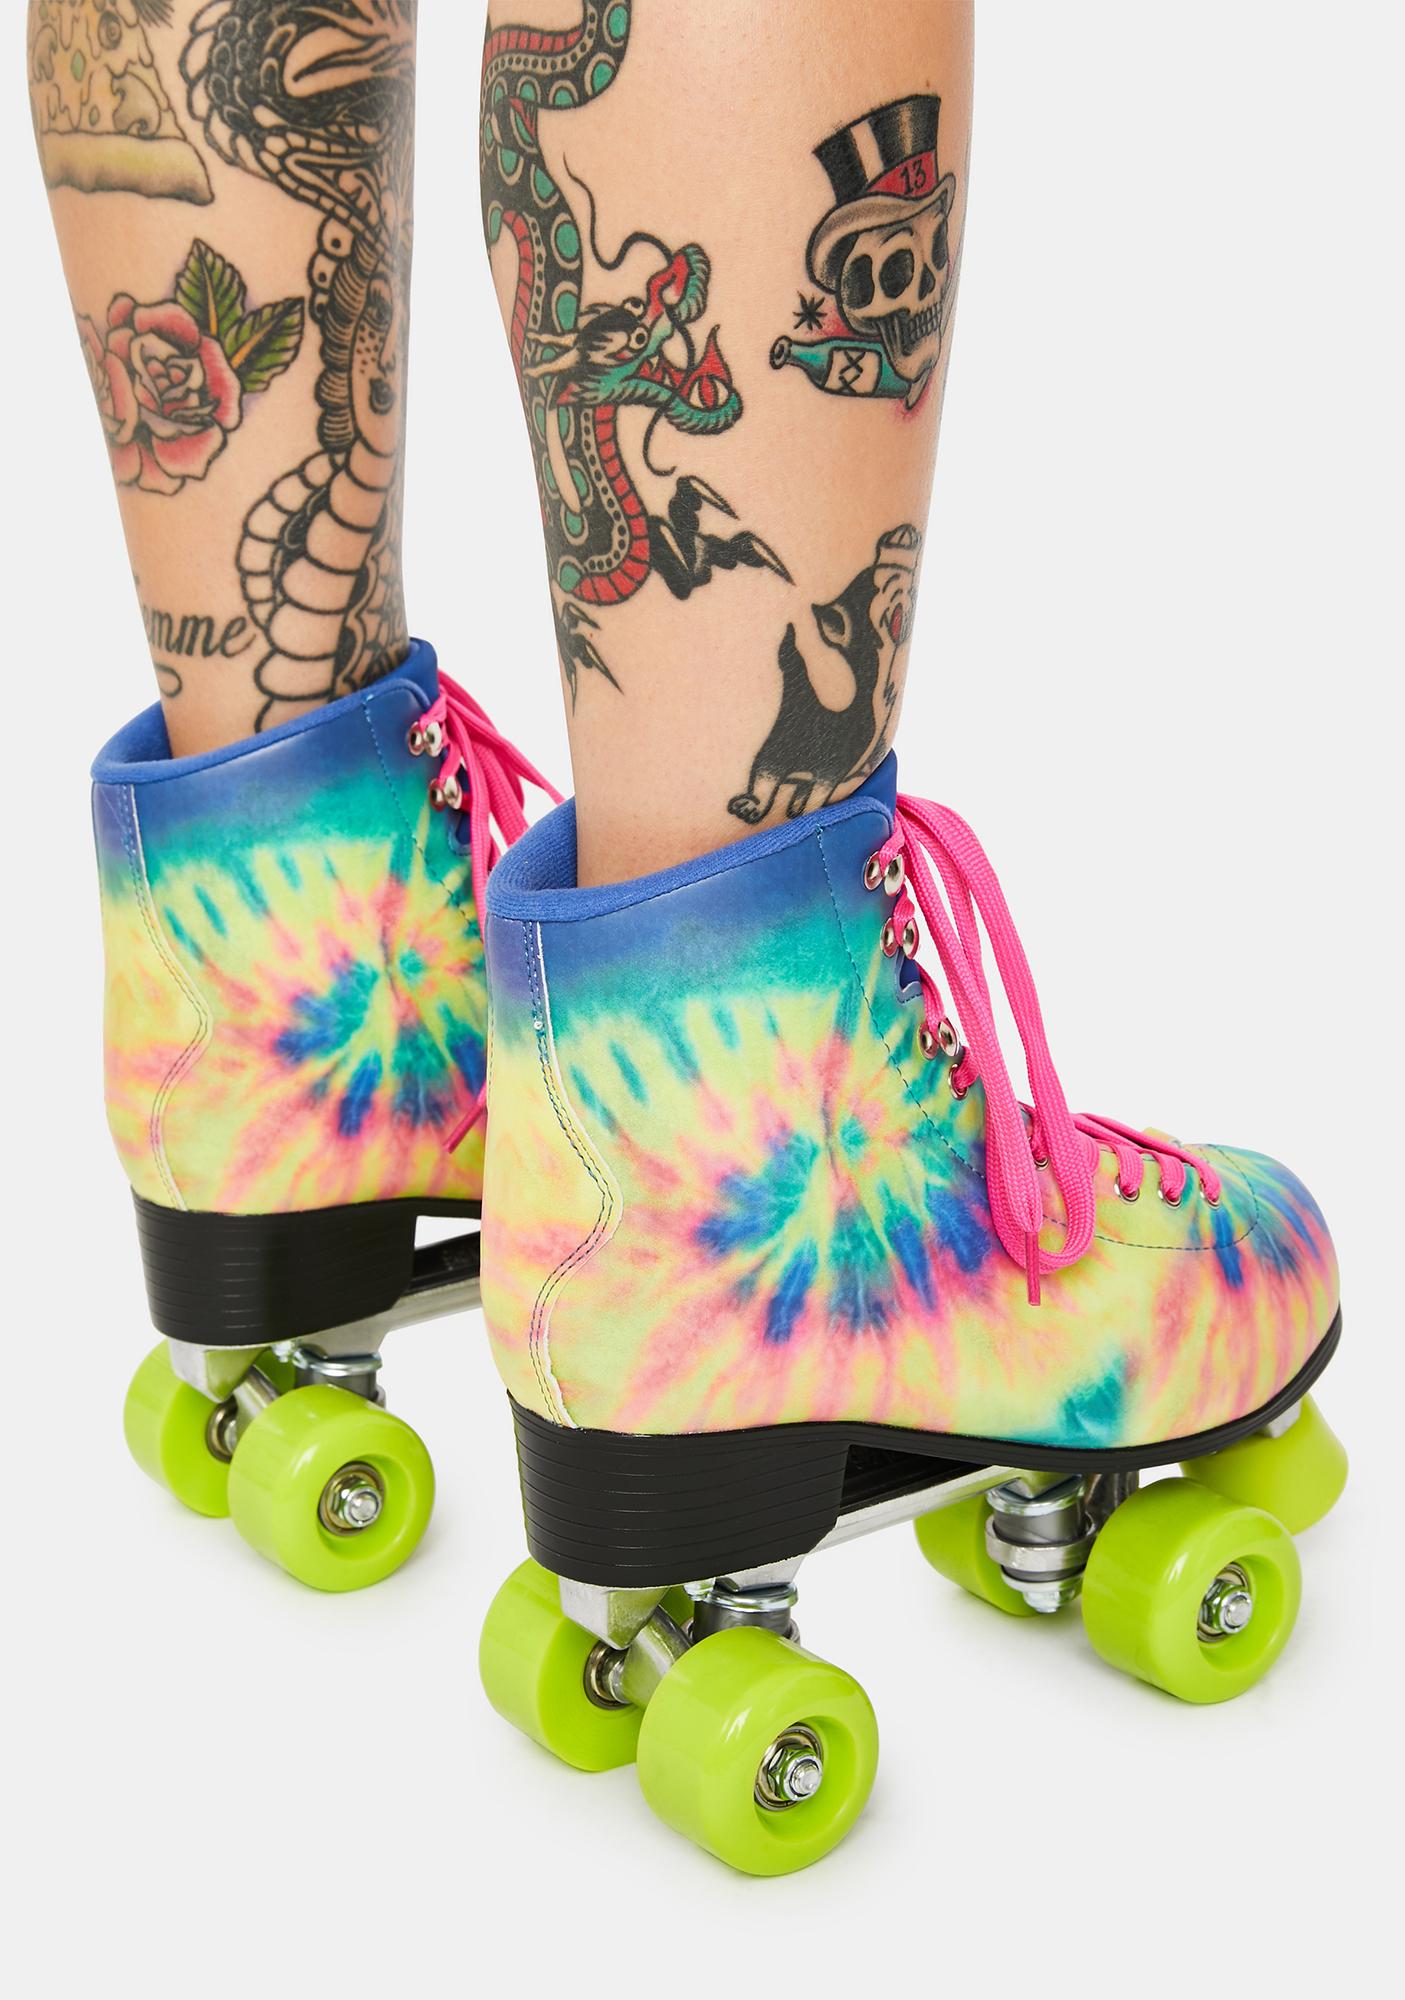 Lace Up Roller Skates - Rainbow Tie Dye | Dolls Kill